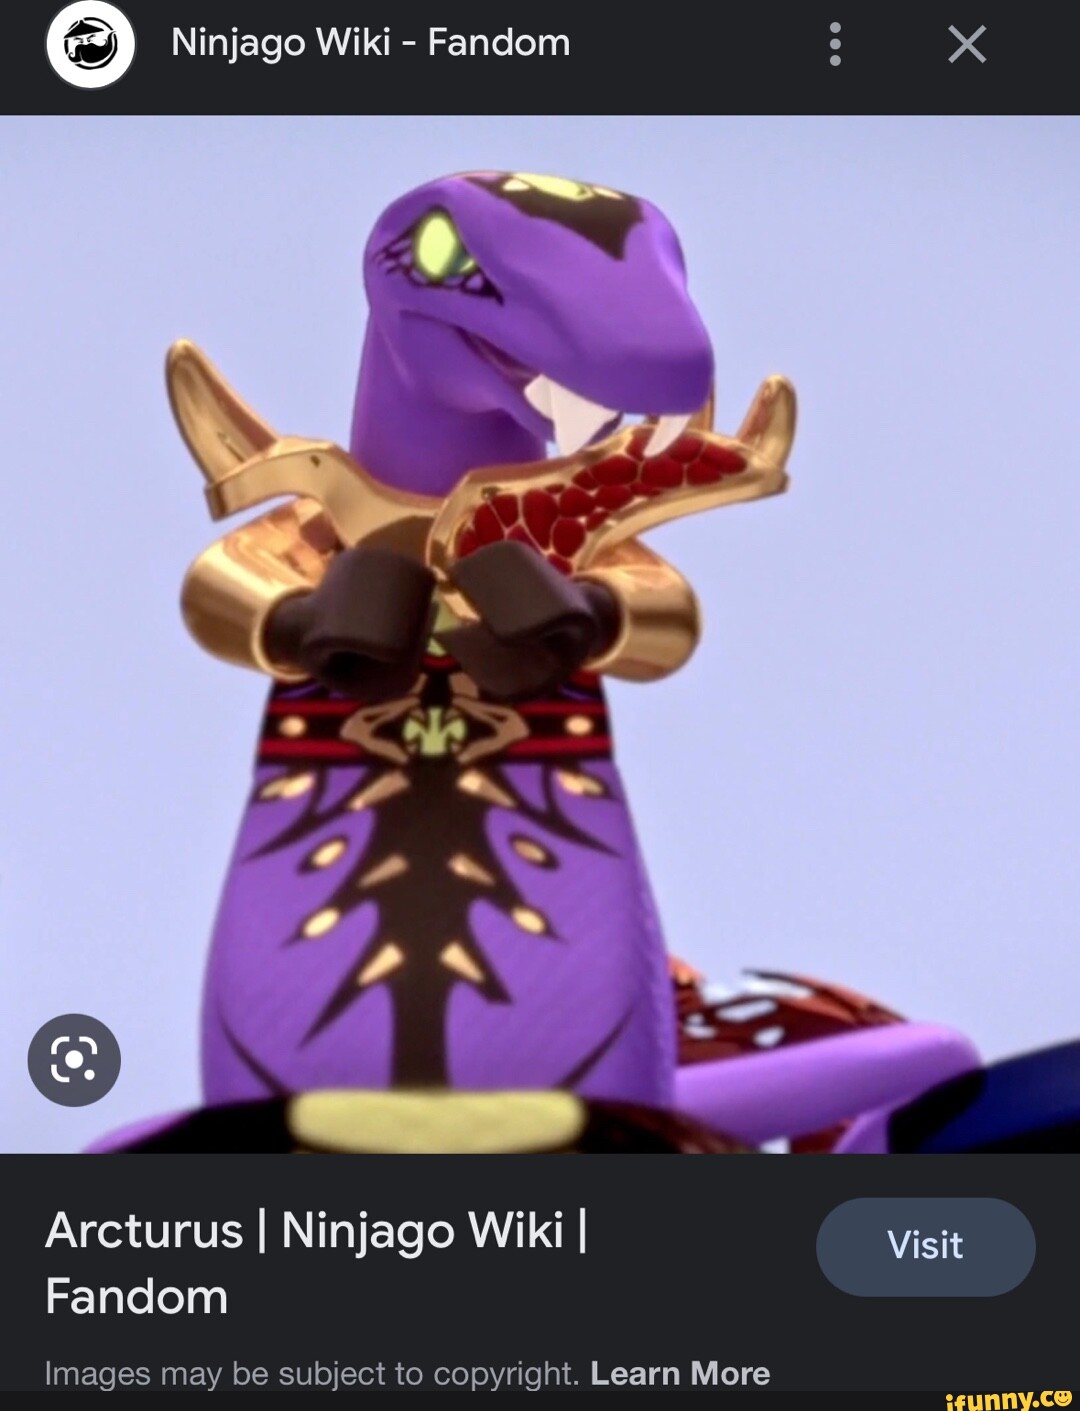 arcturus ninjago